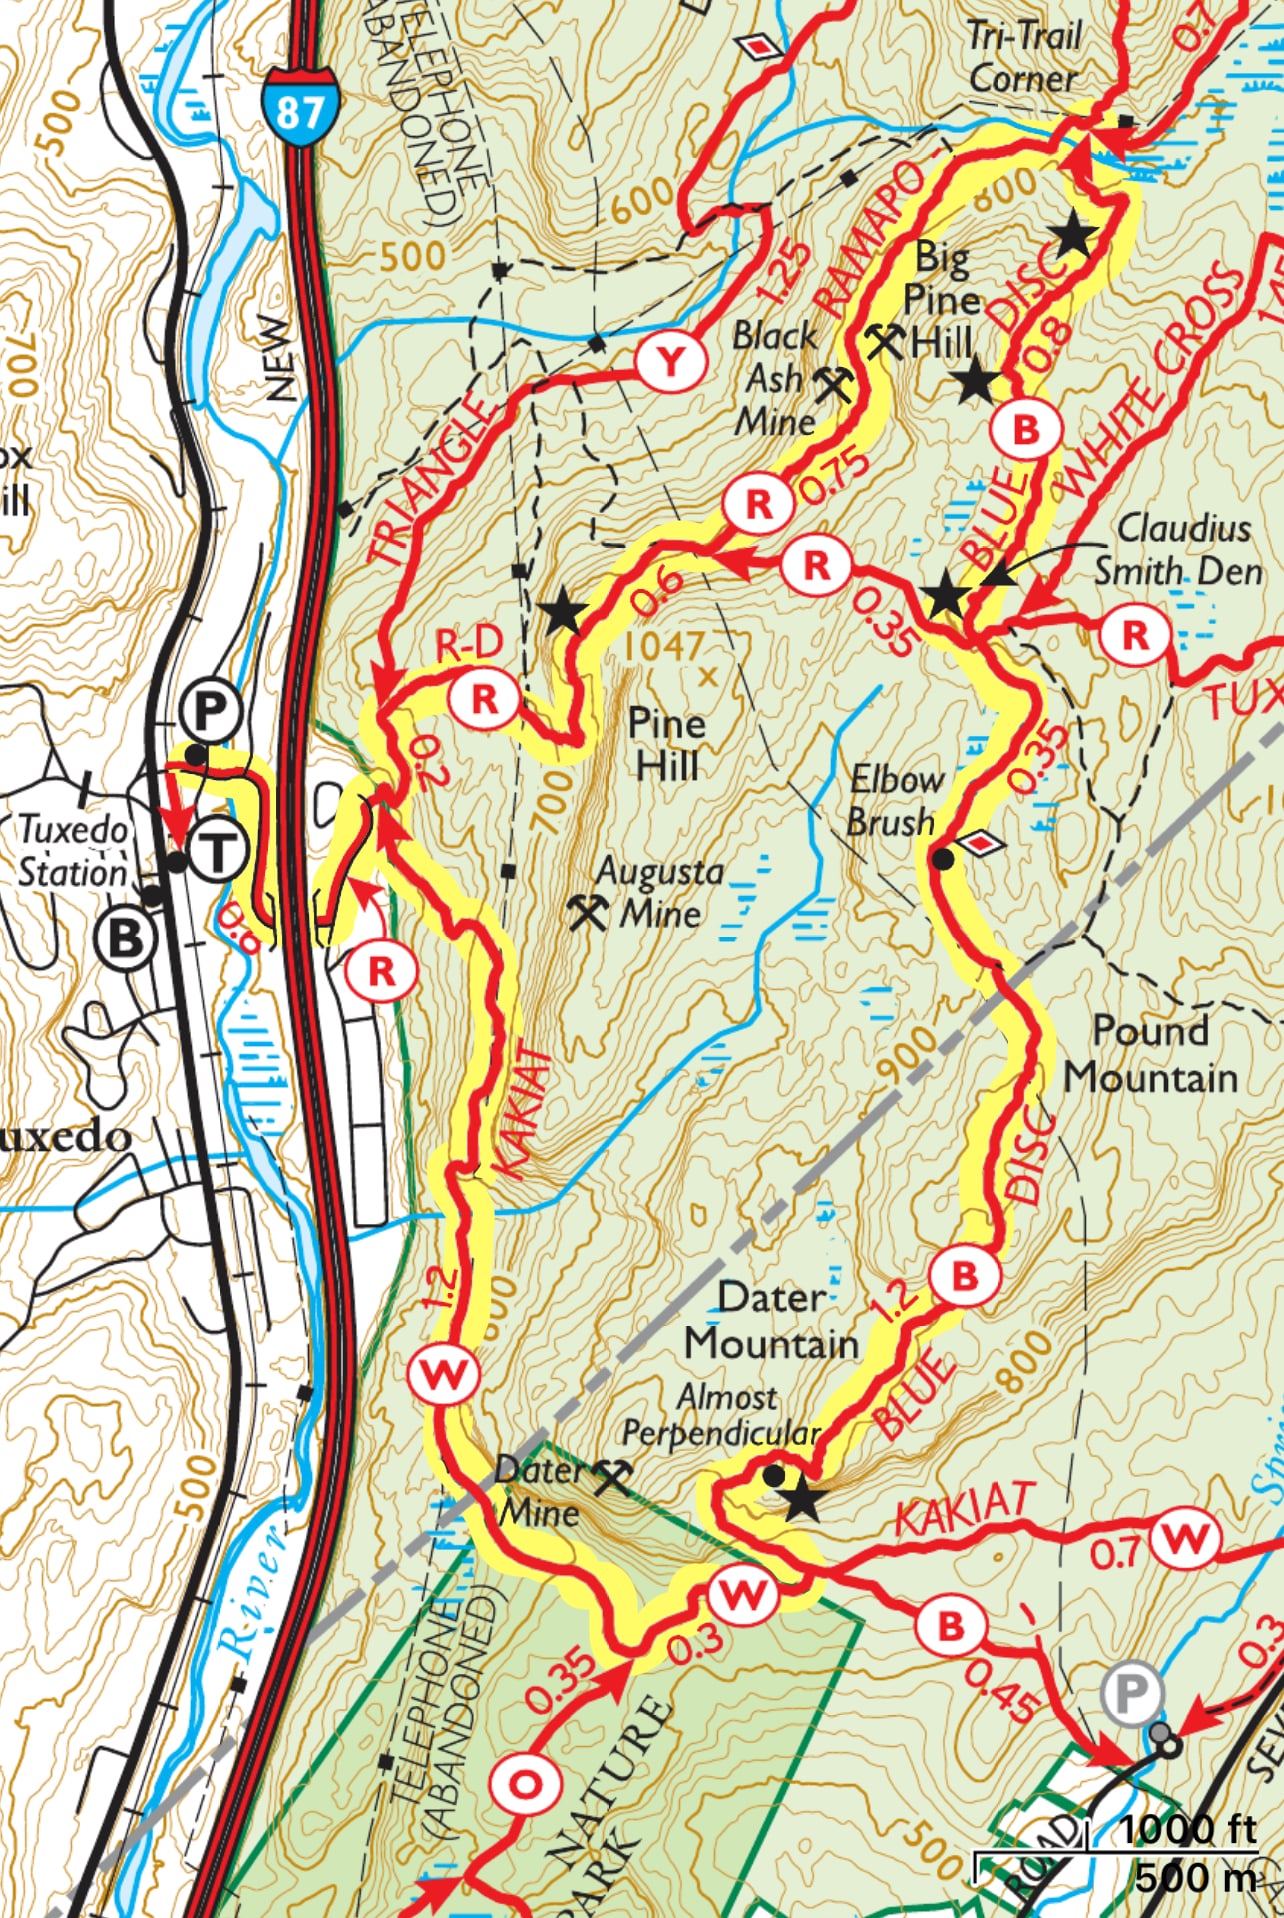 Almost Perpendicular Claudius Smith Den trail map